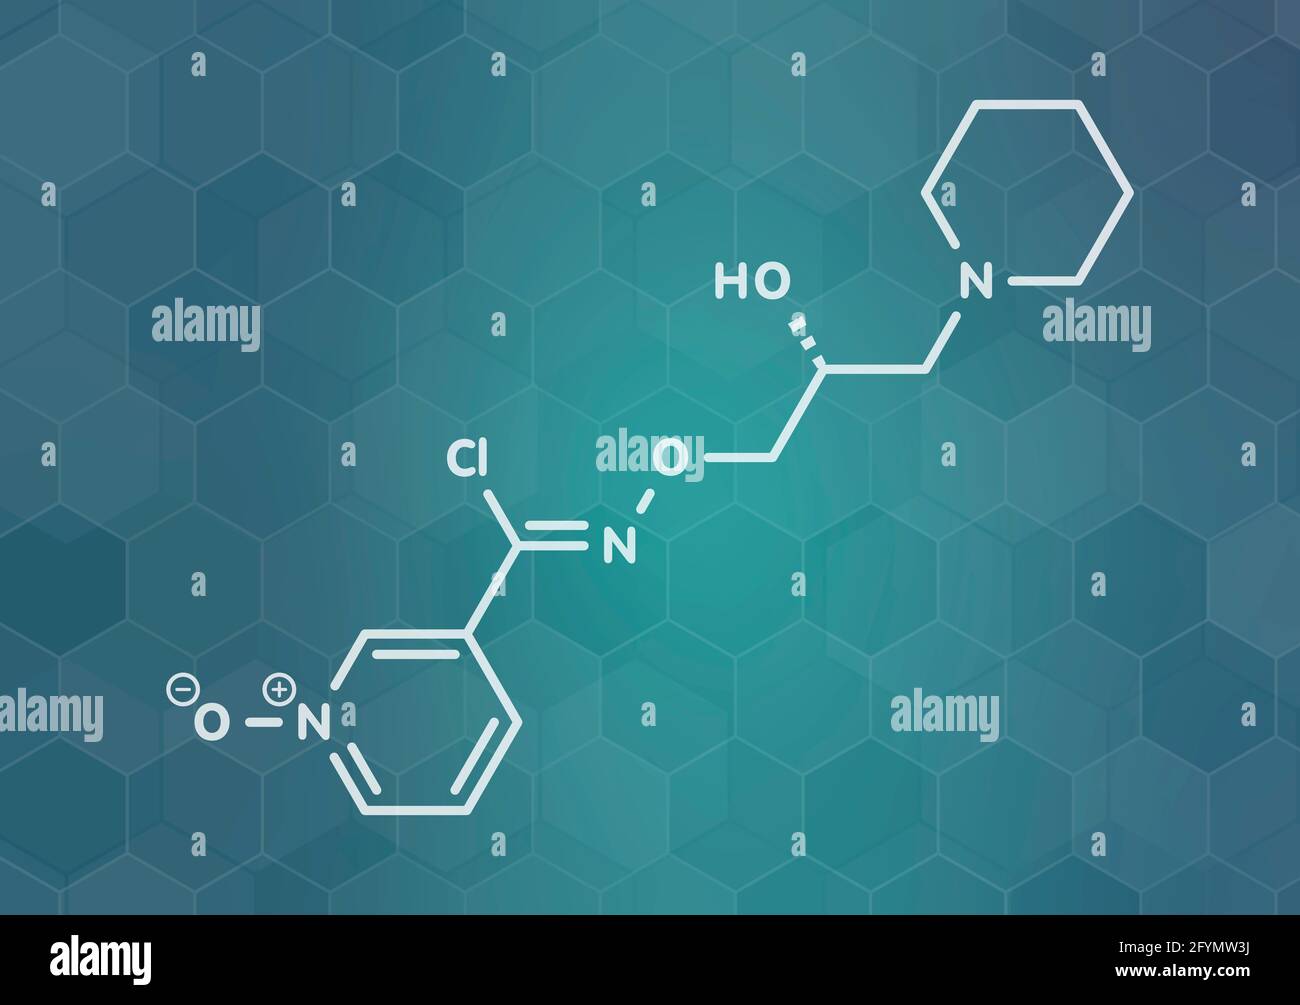 Arimoclomol drug molecule, illustration Stock Photo